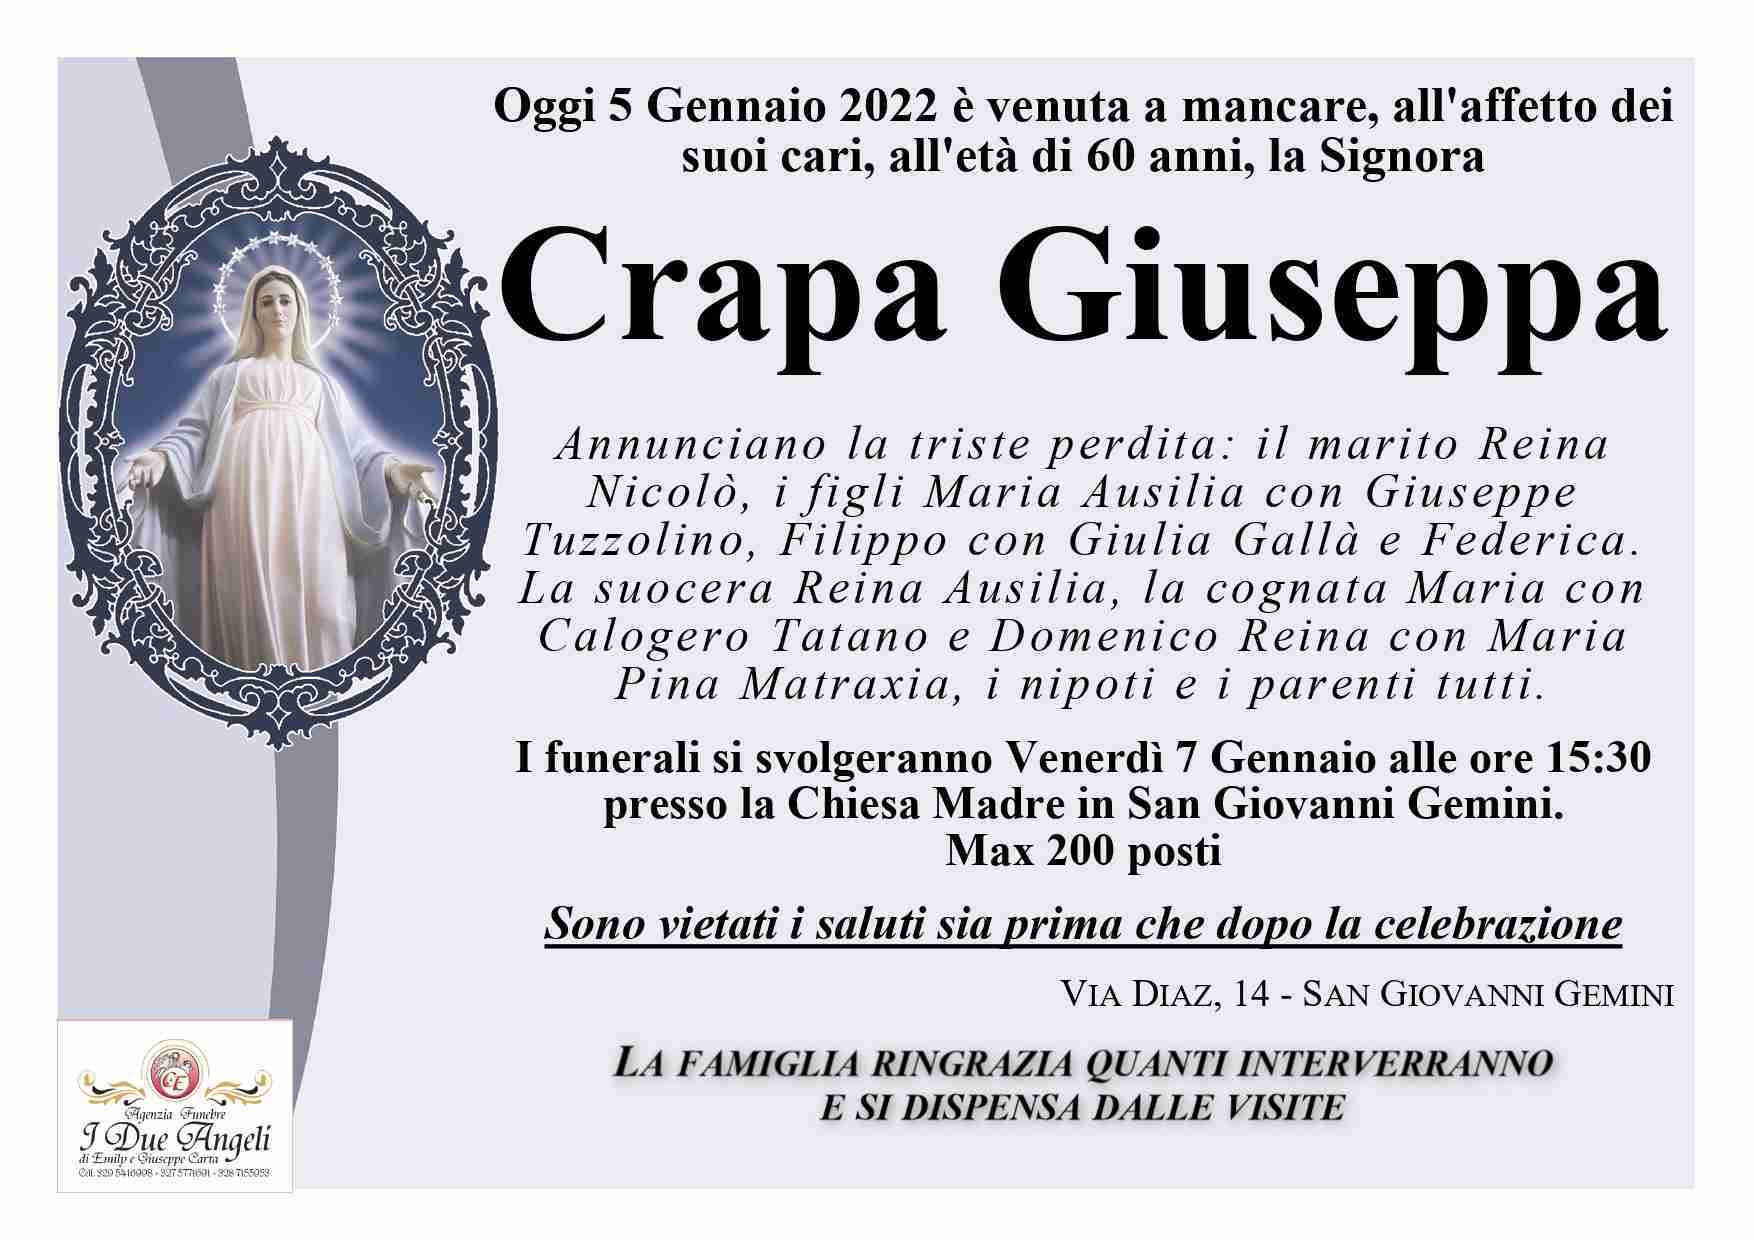 Giuseppa Crapa